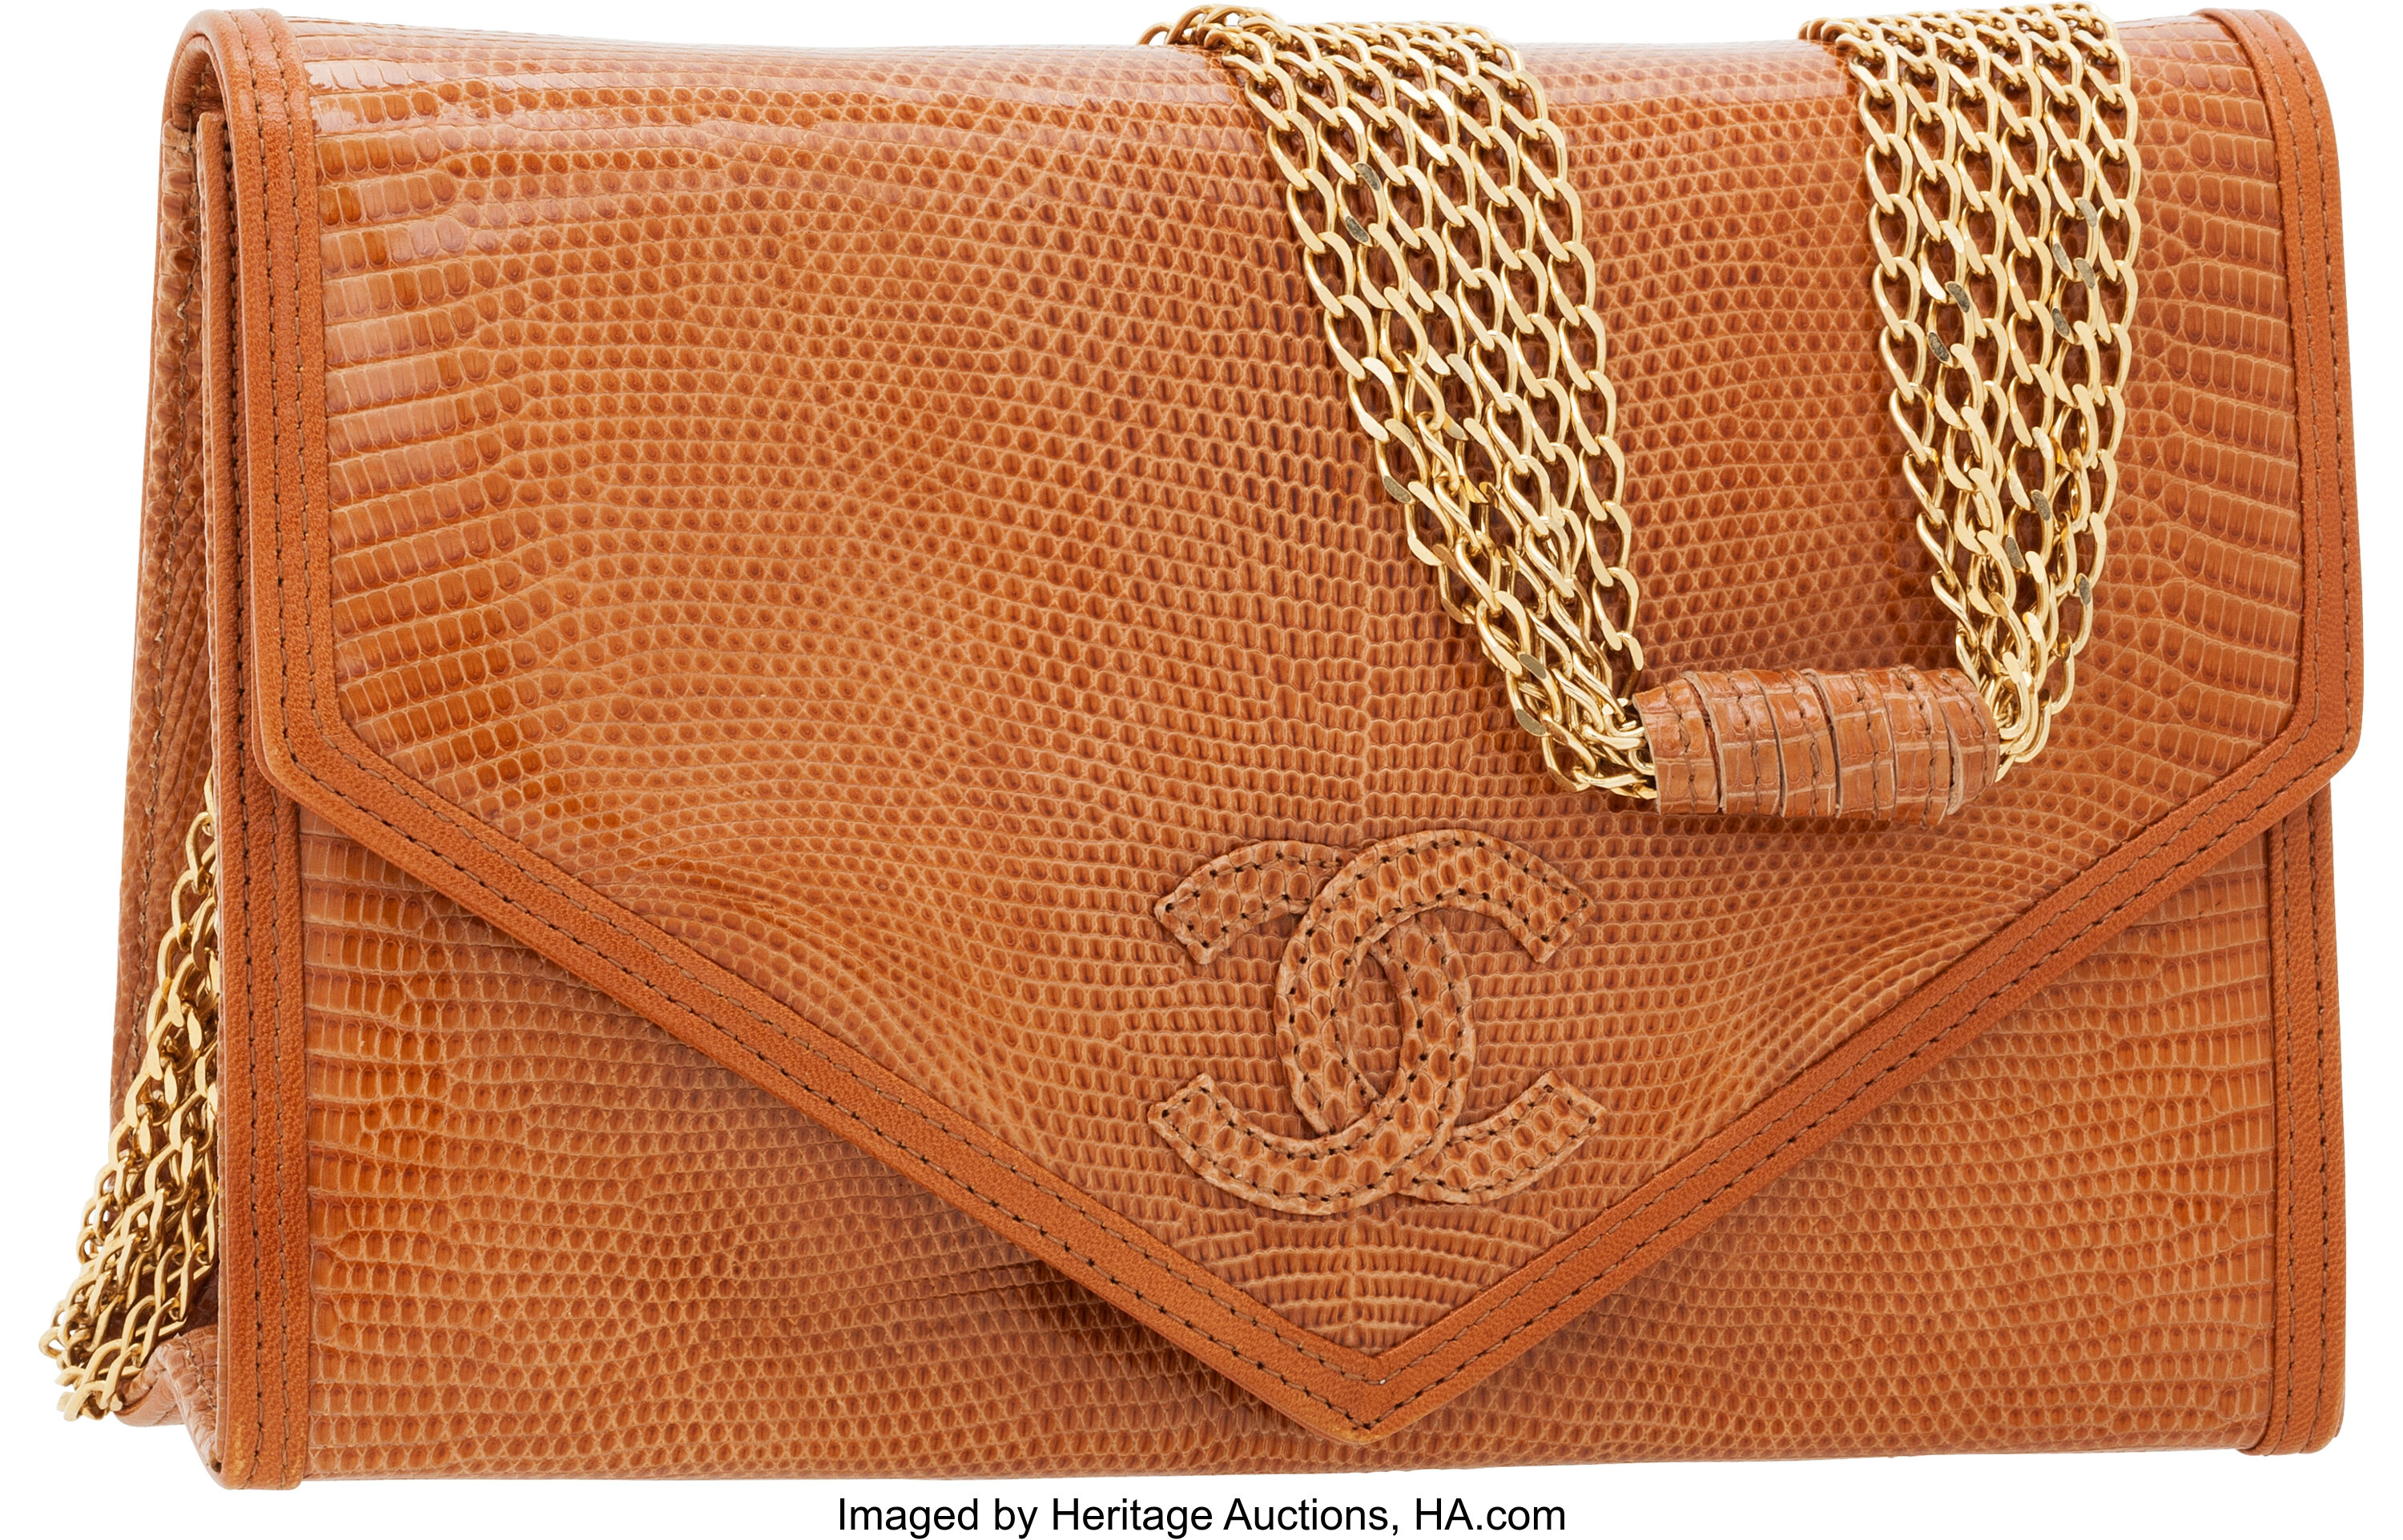 Chanel Brown Lizard Flap Clutch Bag with Multichain Shoulder Strap., Lot  #56273